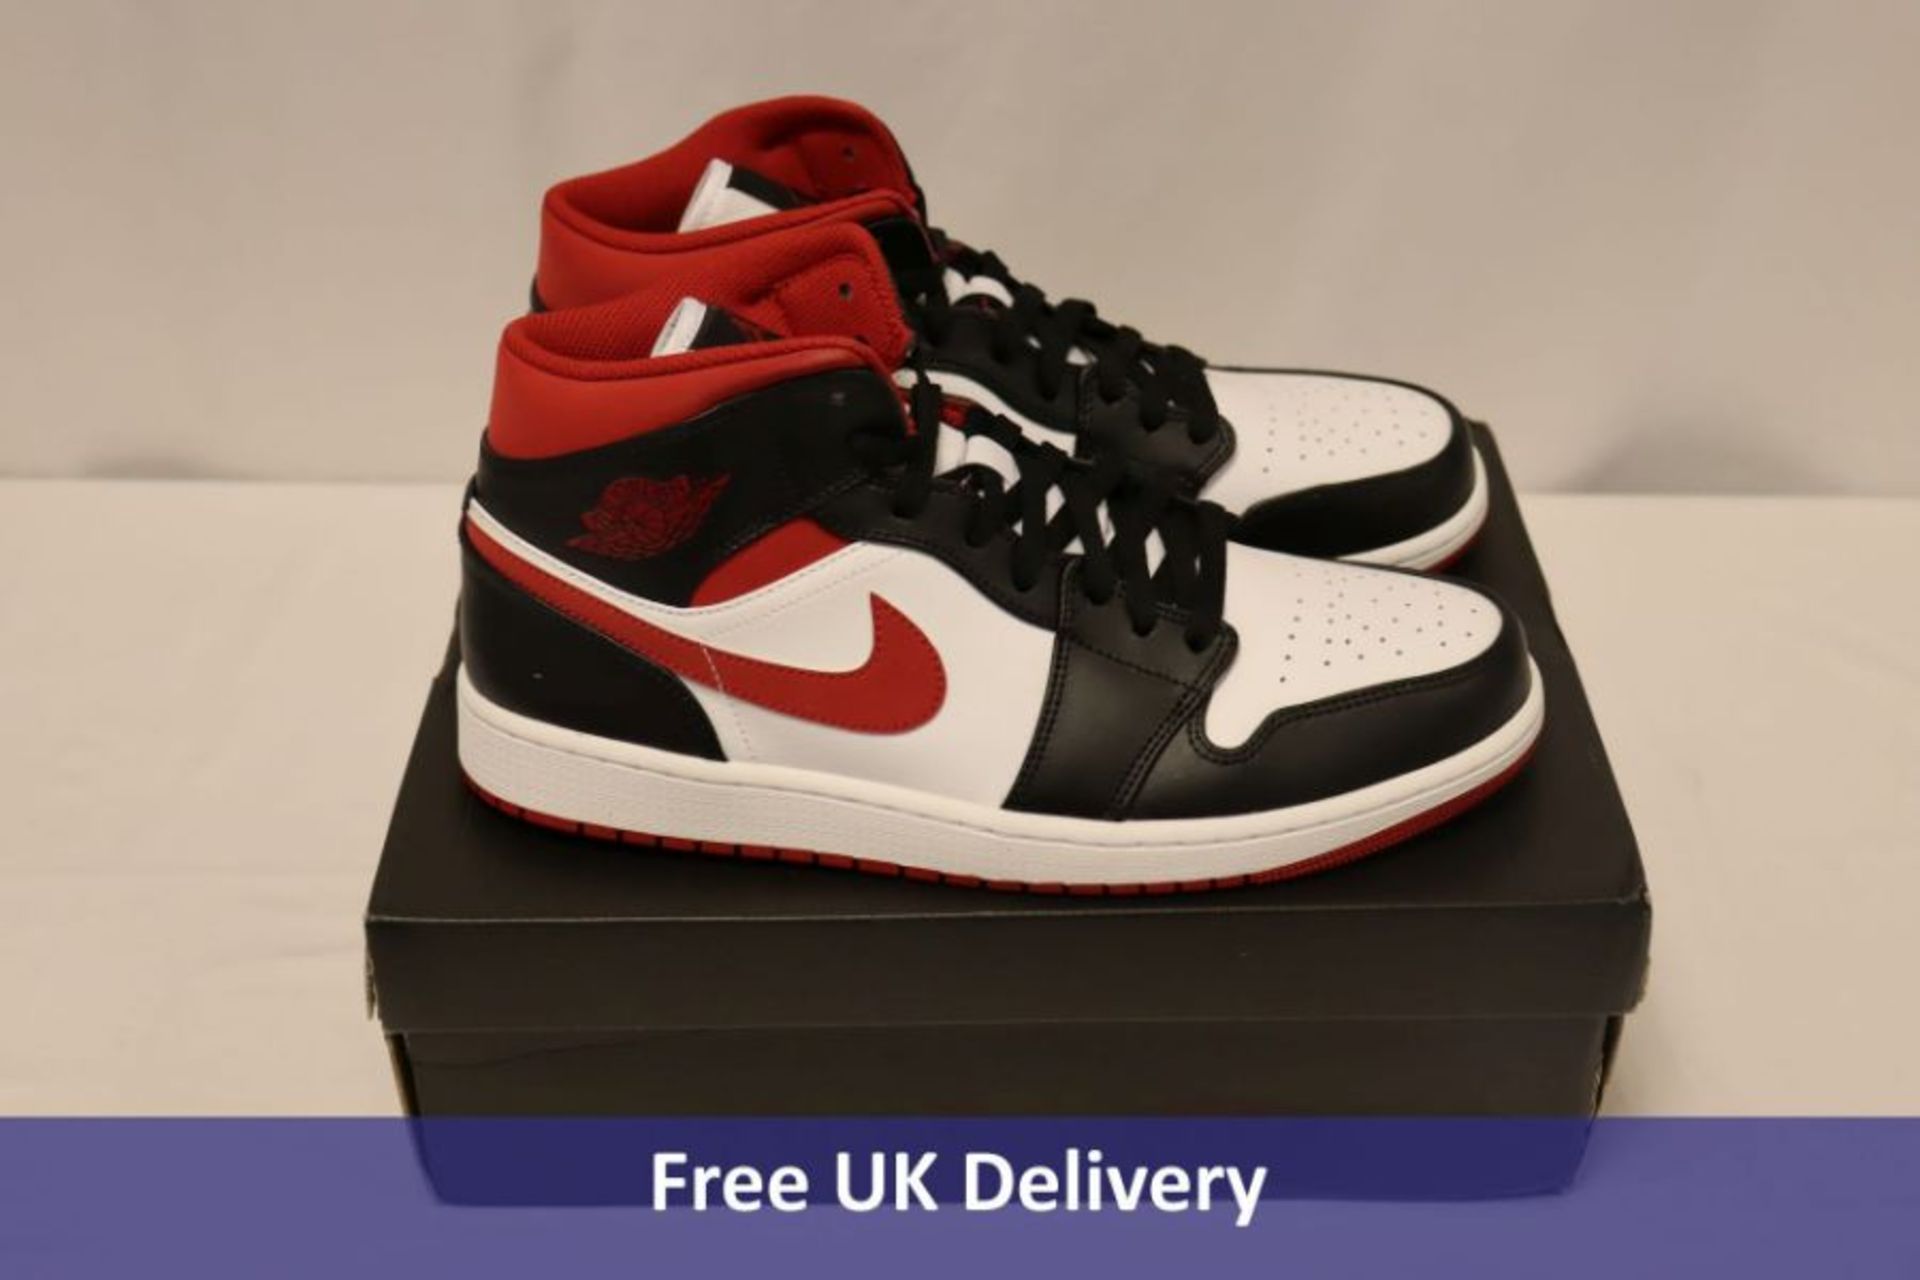 Nike Air Jordan 1 Mid Trainers, White/Gym Red/Black, UK 11.5